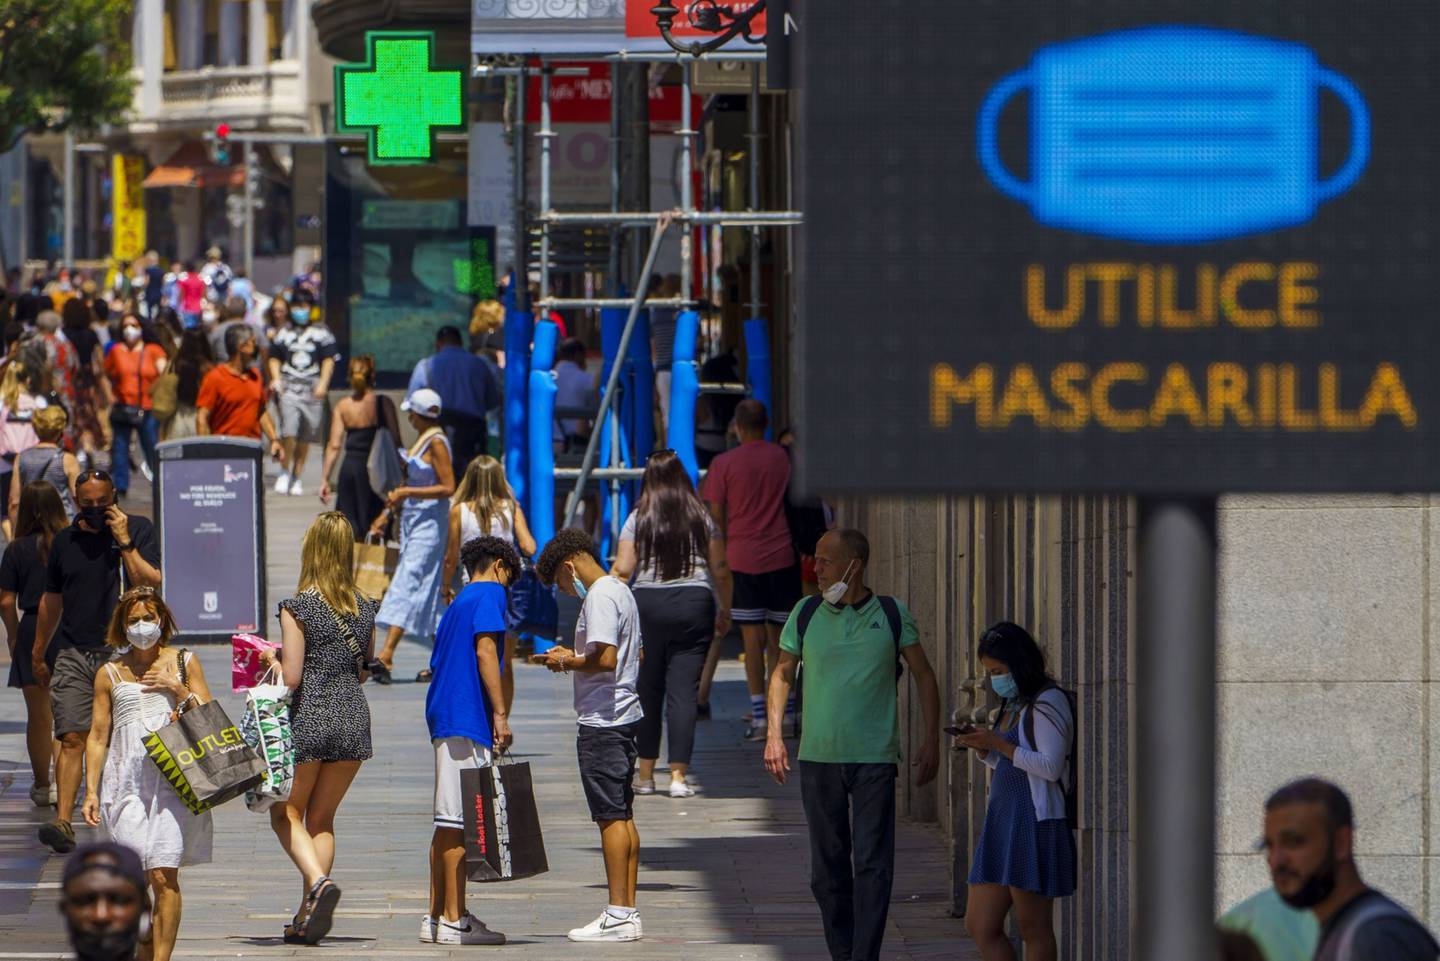 A busy shopping precinct in Madrid, Spain